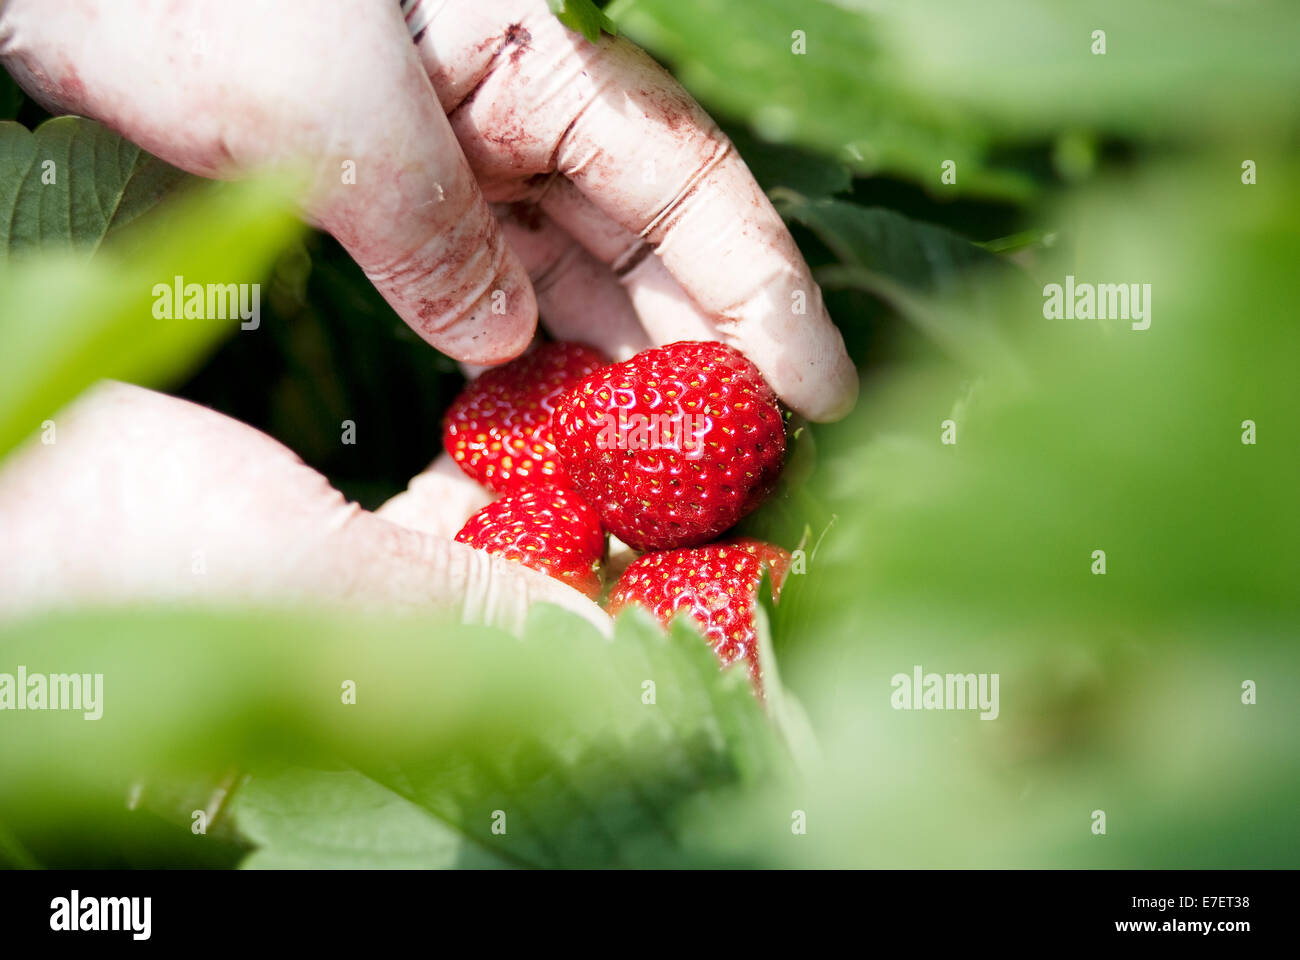 Farmer picking fresh strawberries on organic plantation during harvest time. Hands holding fresh strowberries. Stock Photo